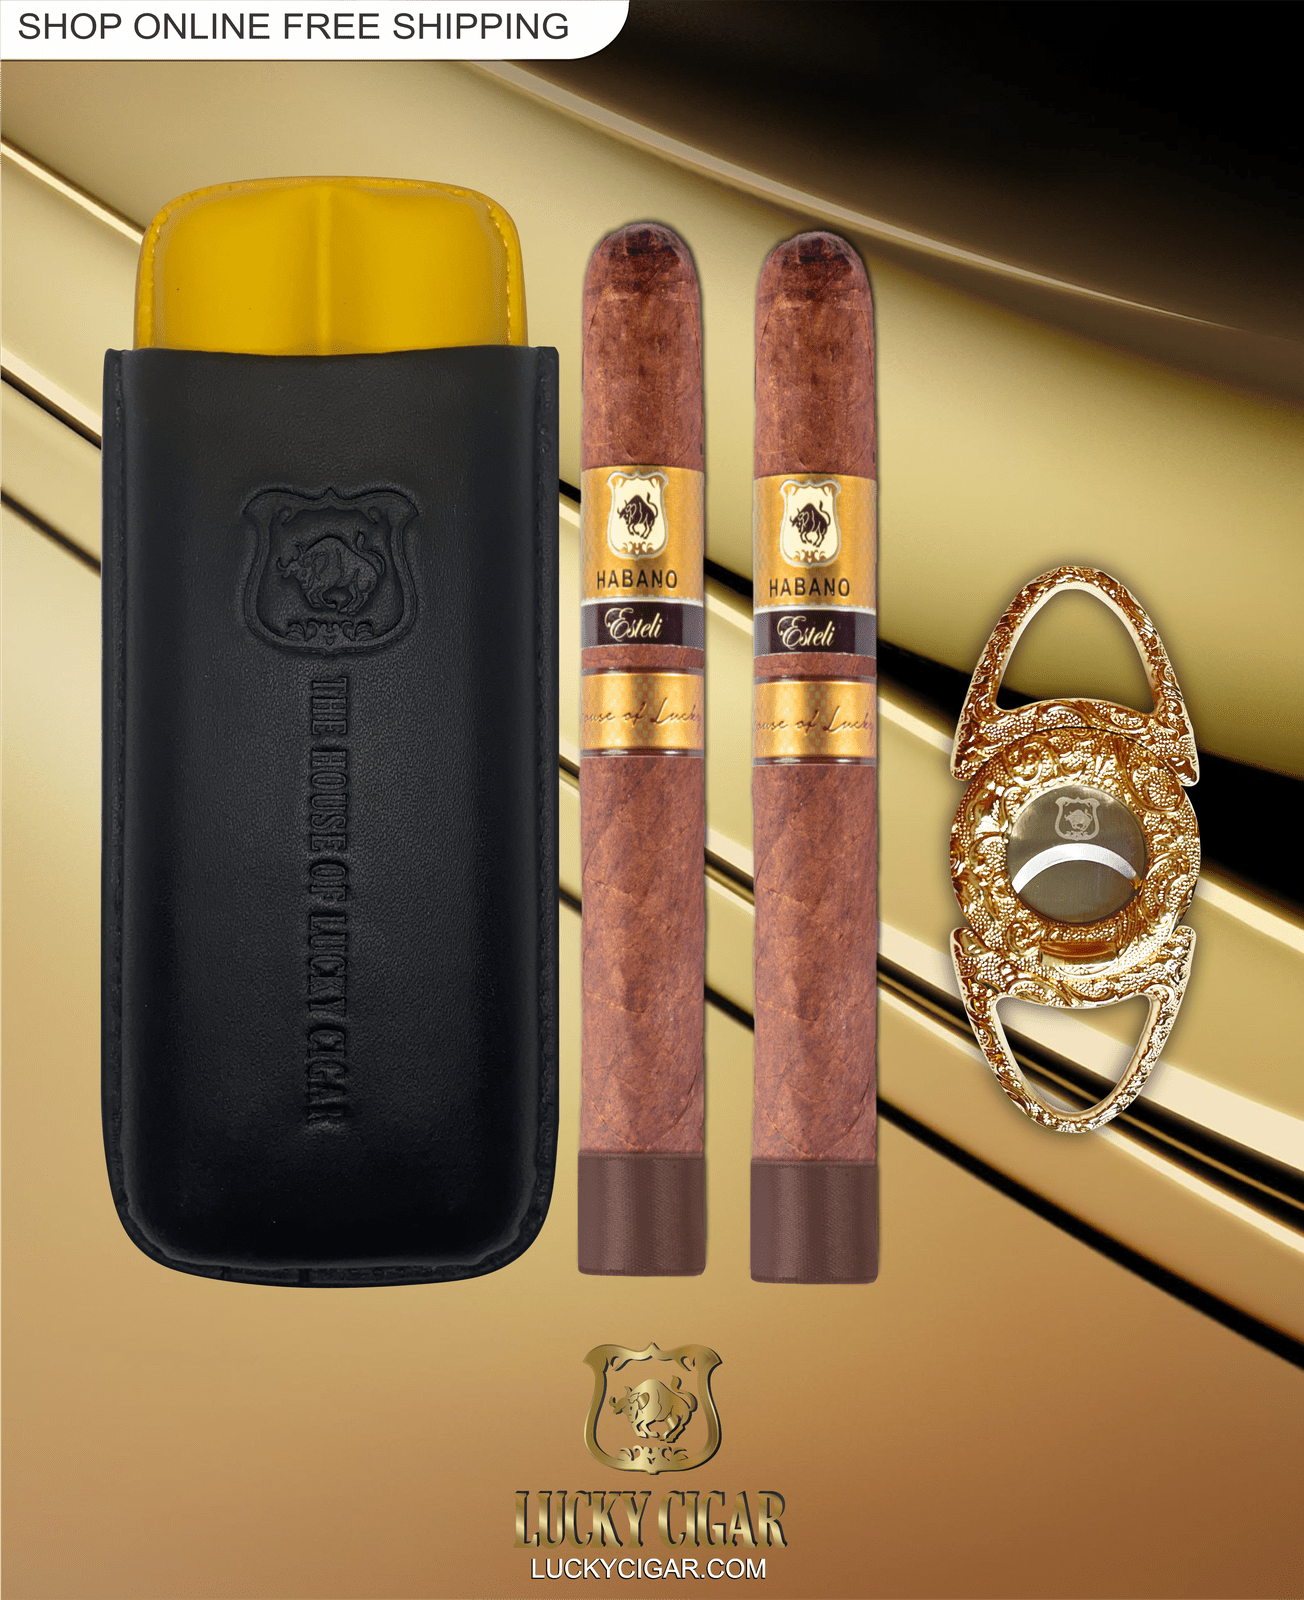 Lucky Cigar Sampler Sets: Set of 2 Toro Habano Esteli 6x50 Cigars with Cutter, Travel Humidor Case